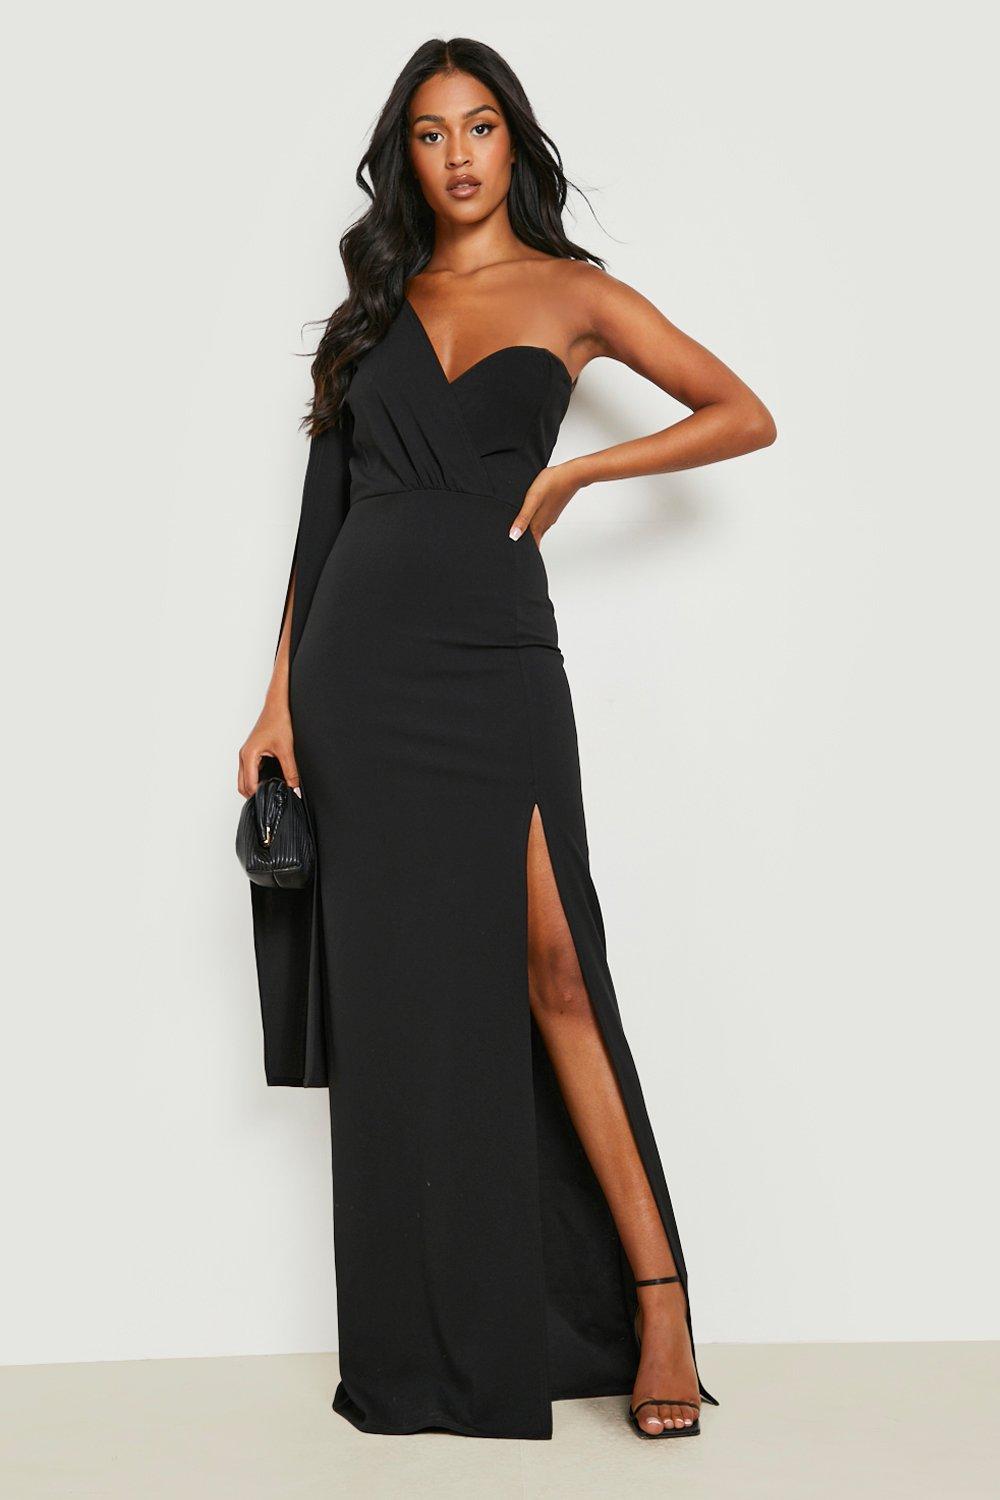 long tall woman in a black dress